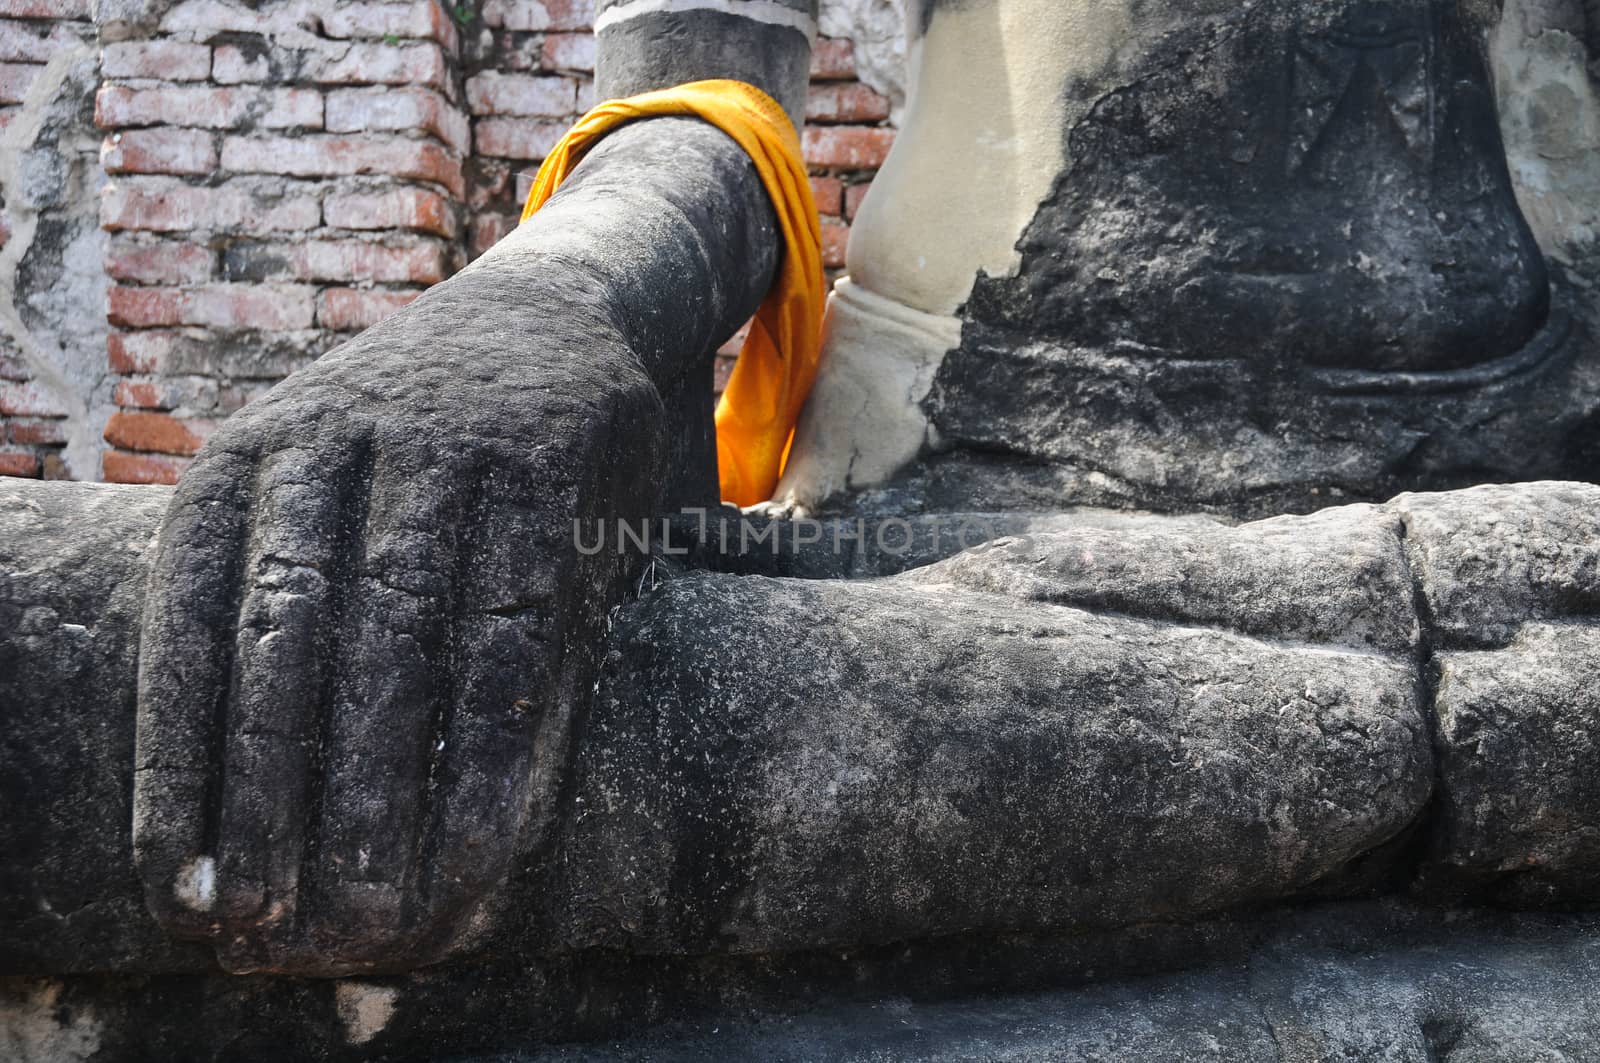 Mercy hand of ancient Buddha statue